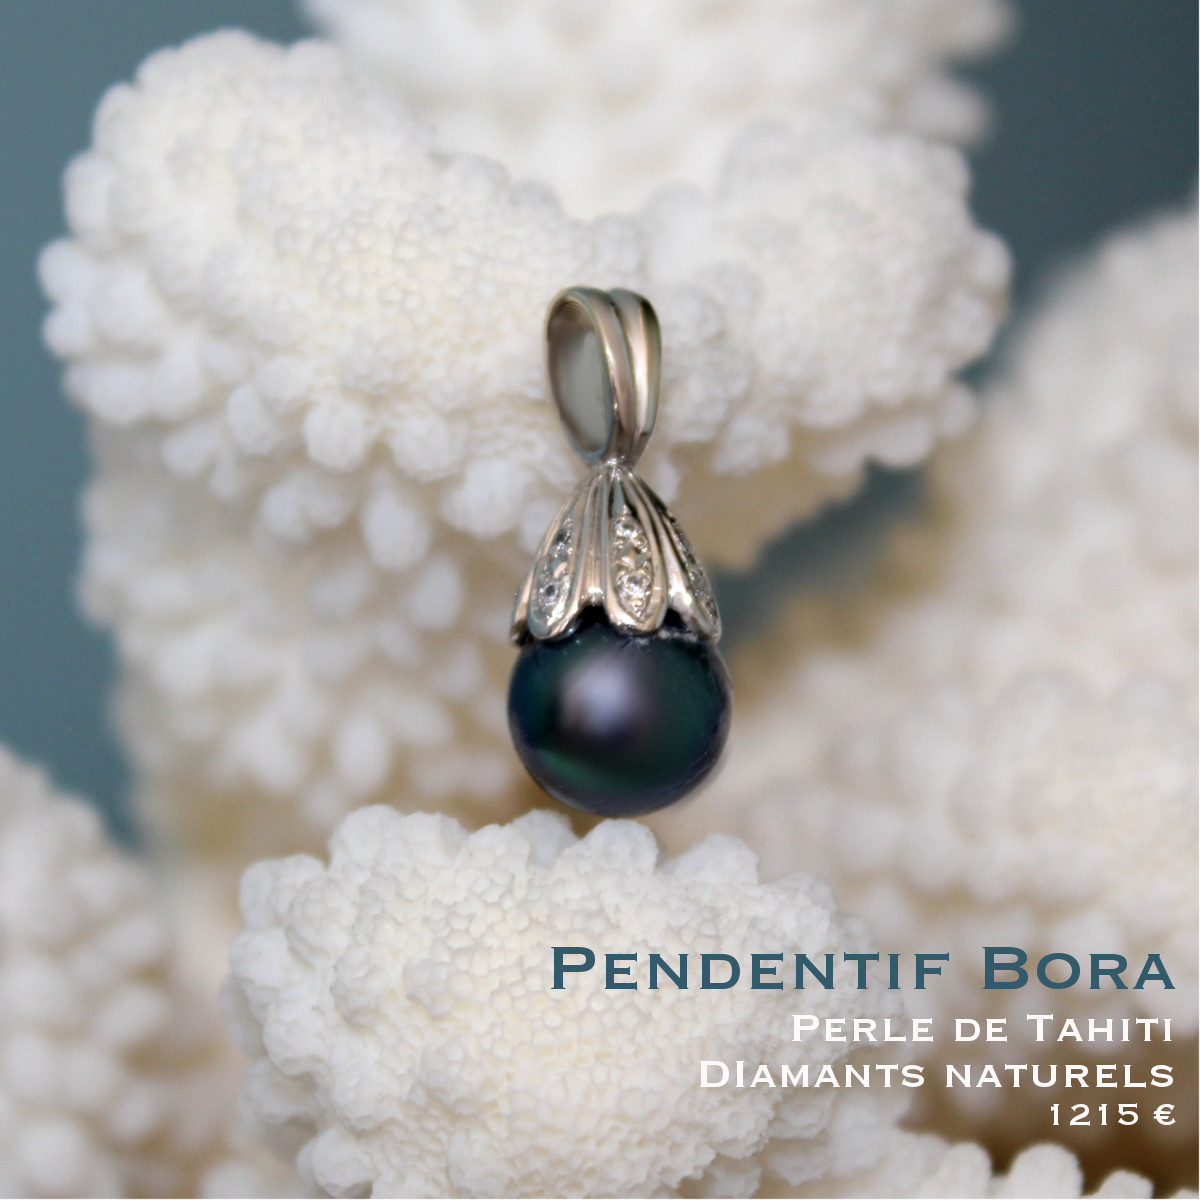 Pendentif Bora - Image 2 